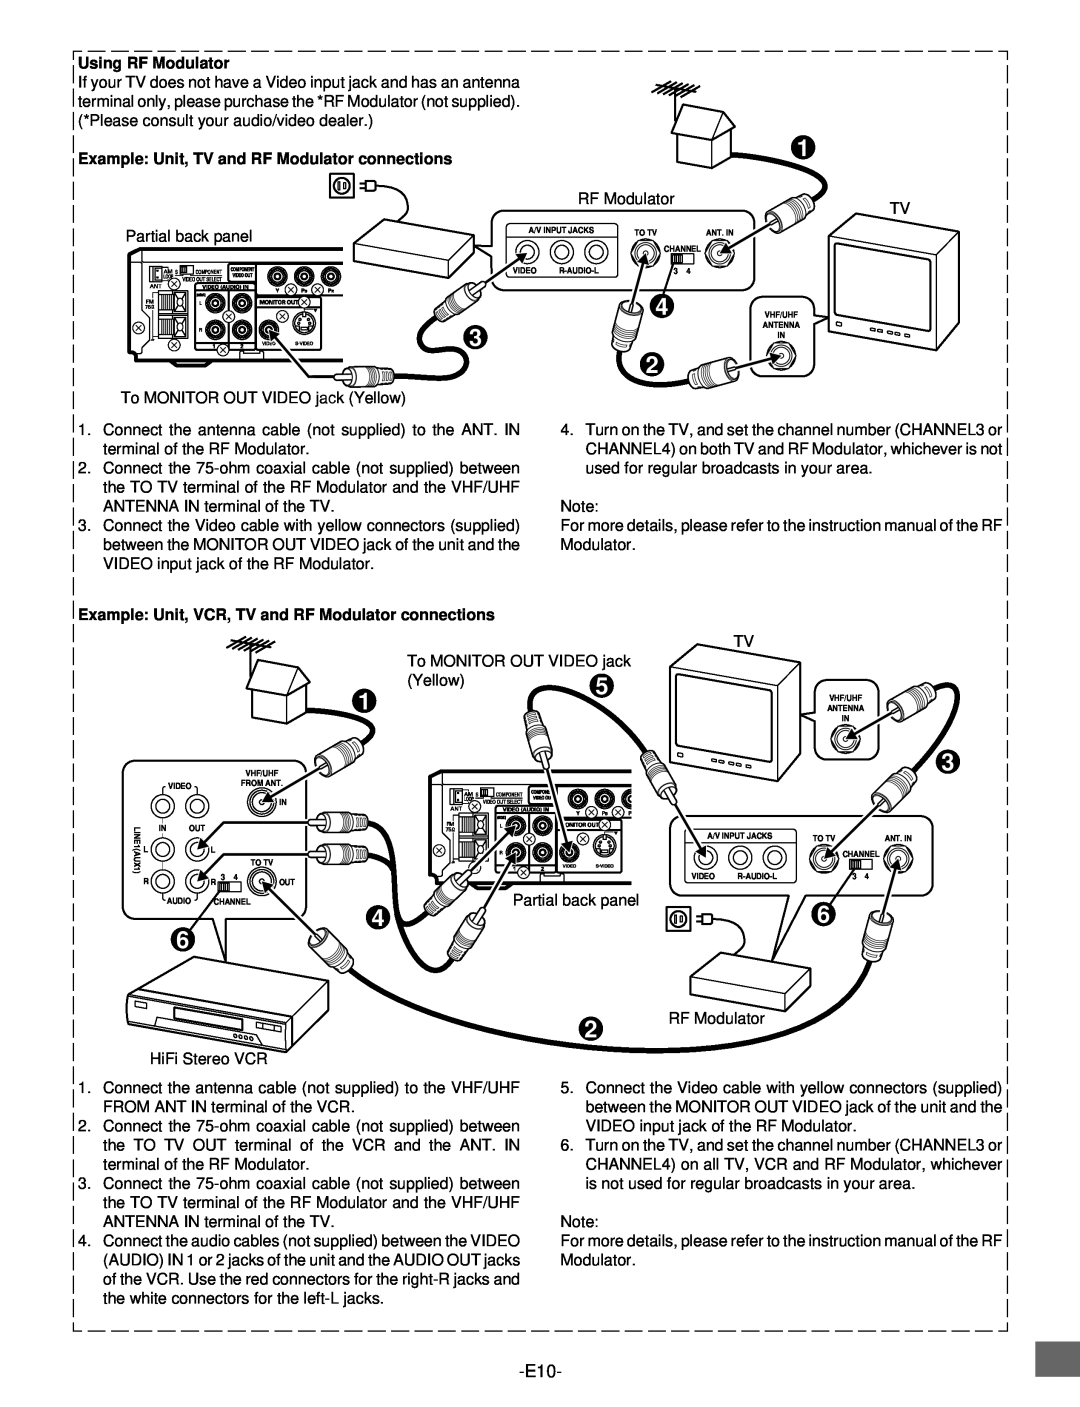 Sanyo DWM-2500 Using RF Modulator, Example: Unit, TV and RF Modulator connections, Partial back panel, Yellow 